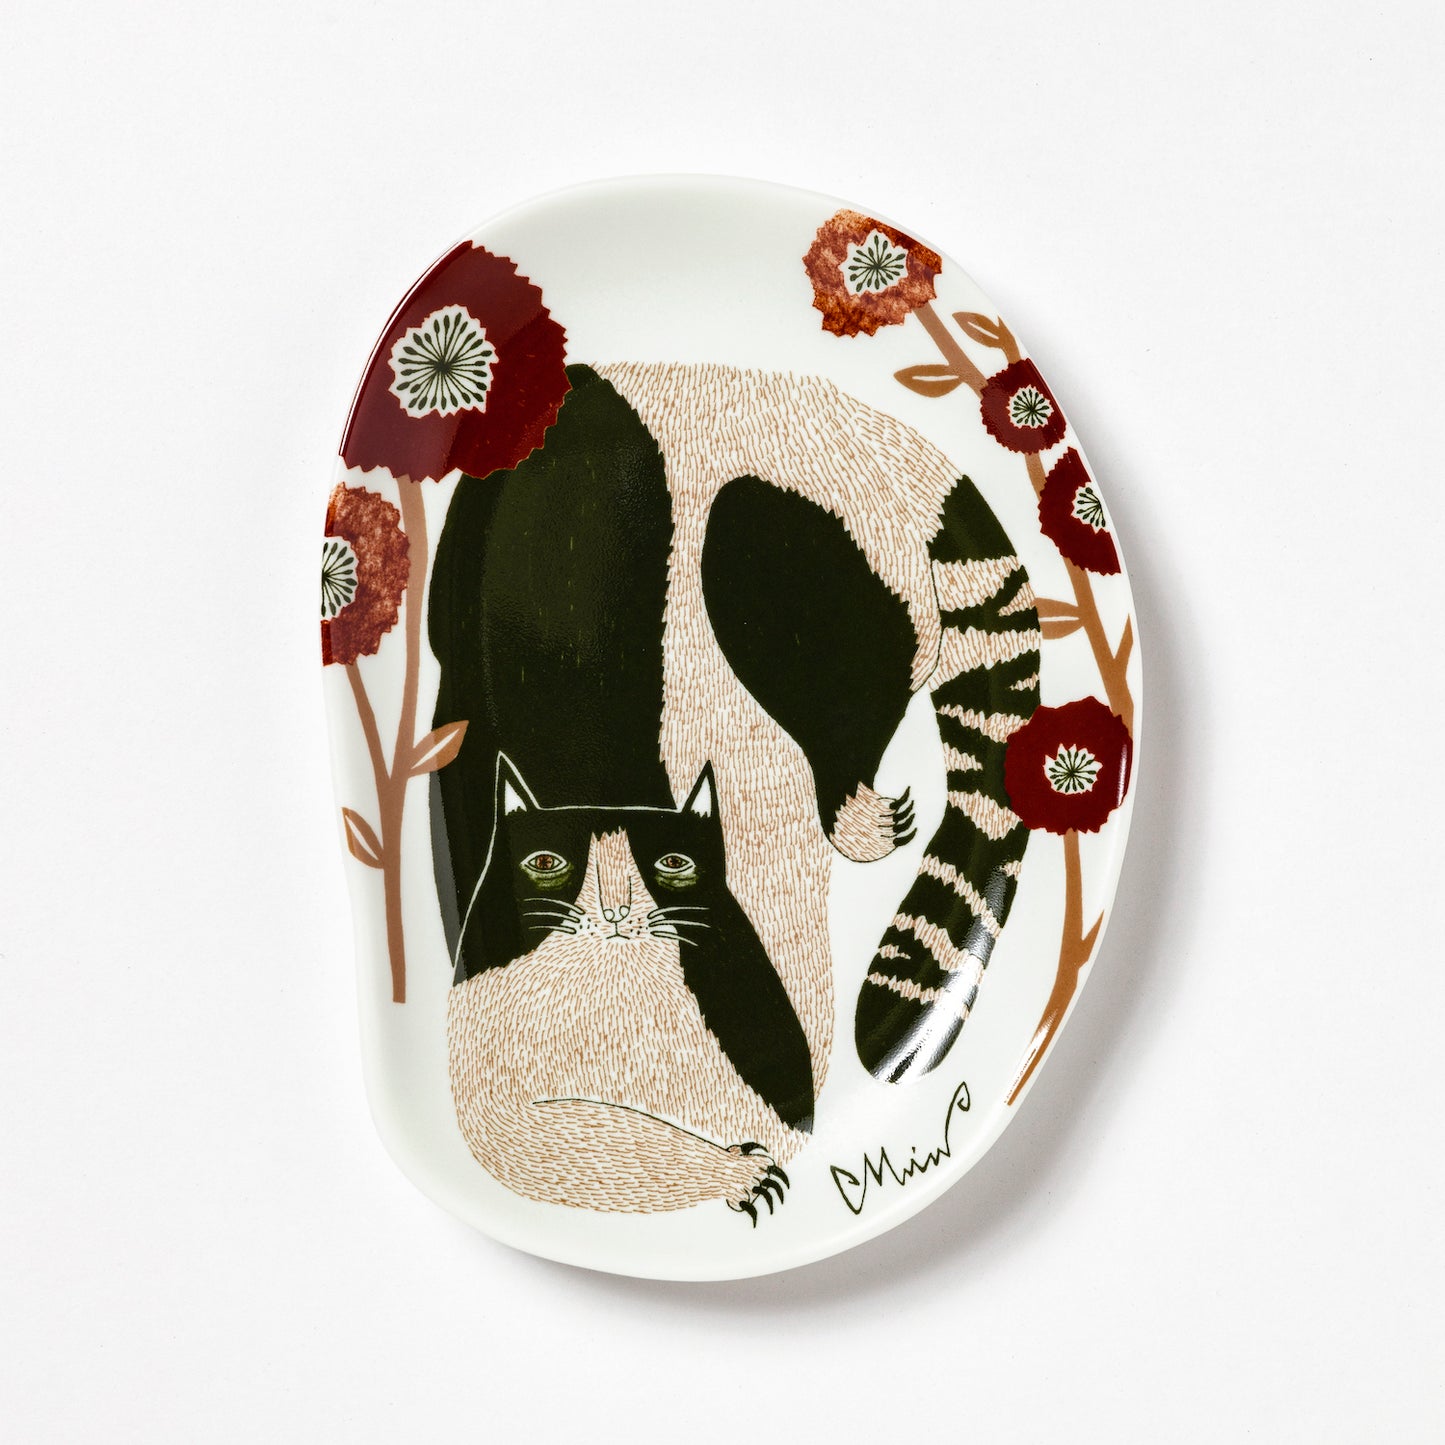 森田Miw 插畫瓷碟 - 貓 Morita Miw Decorative Plate - Cat